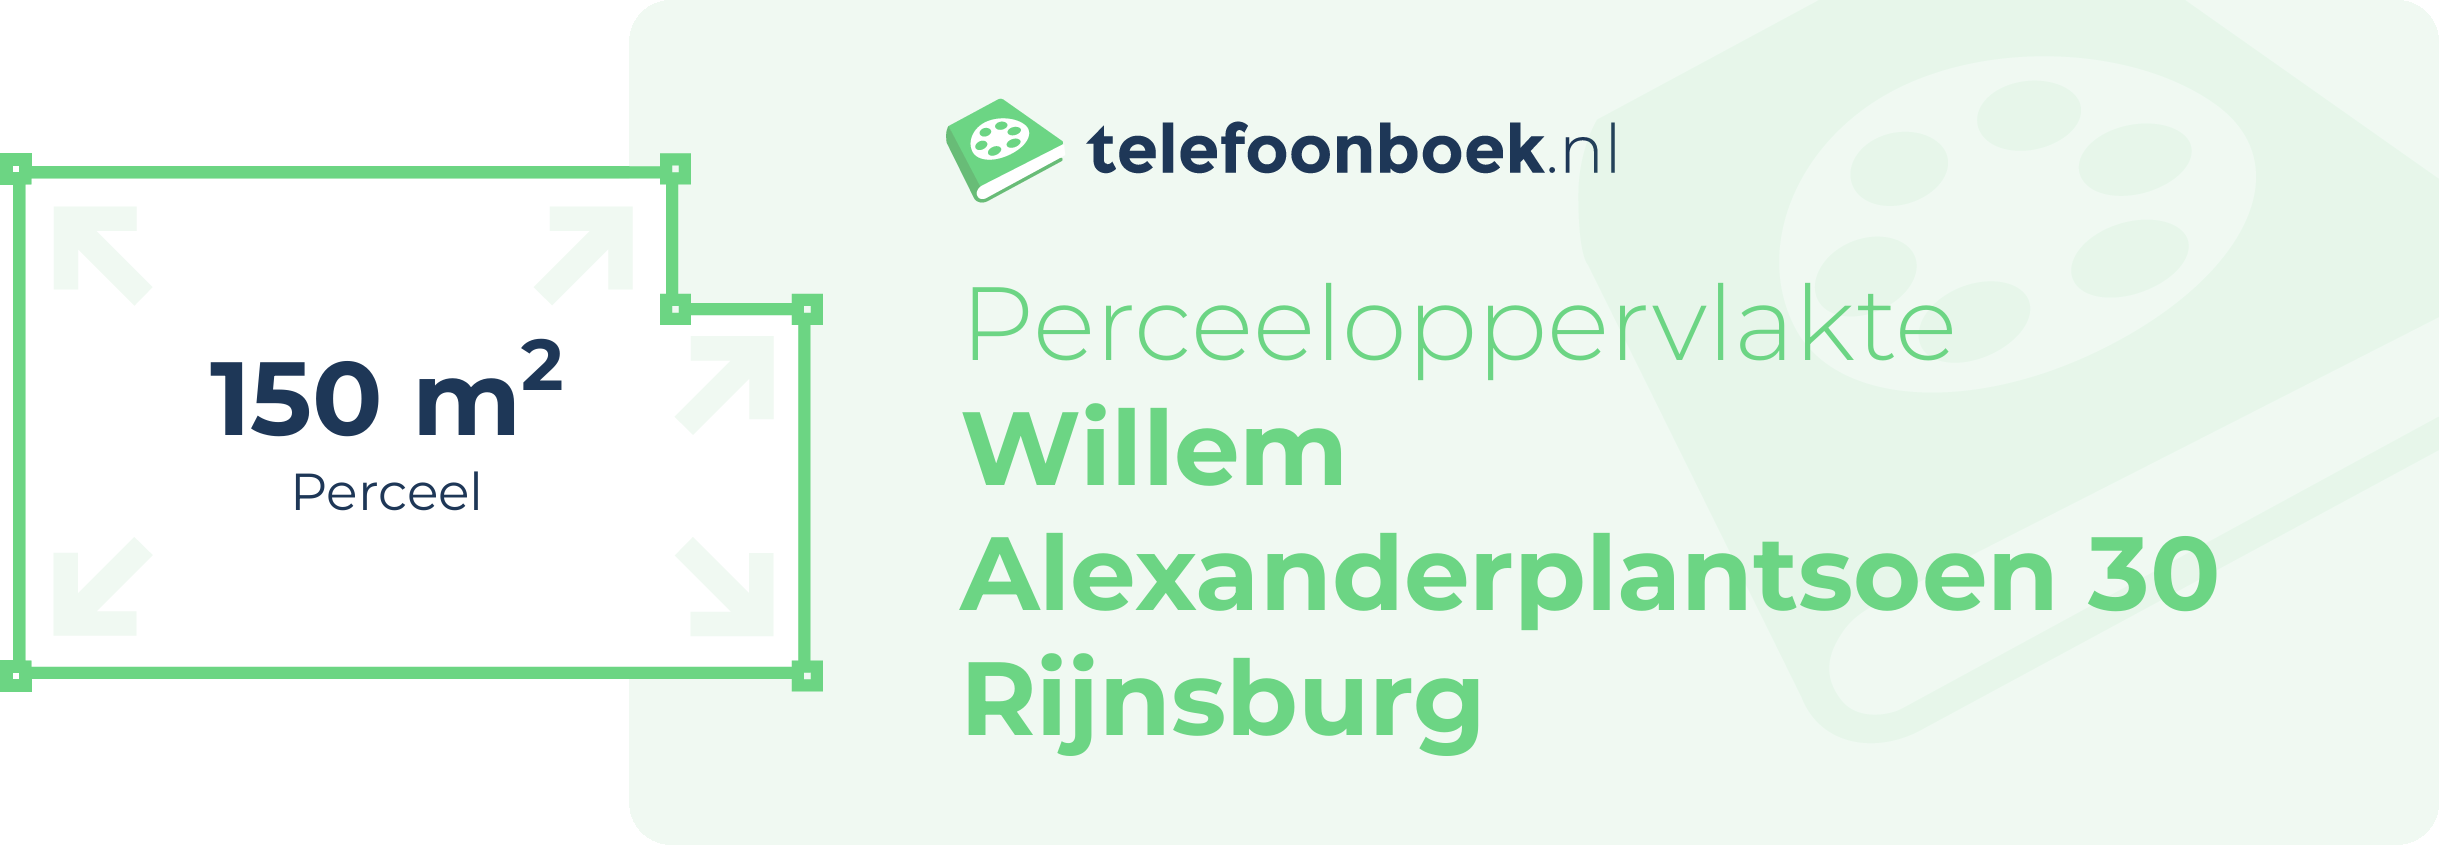 Perceeloppervlakte Willem Alexanderplantsoen 30 Rijnsburg